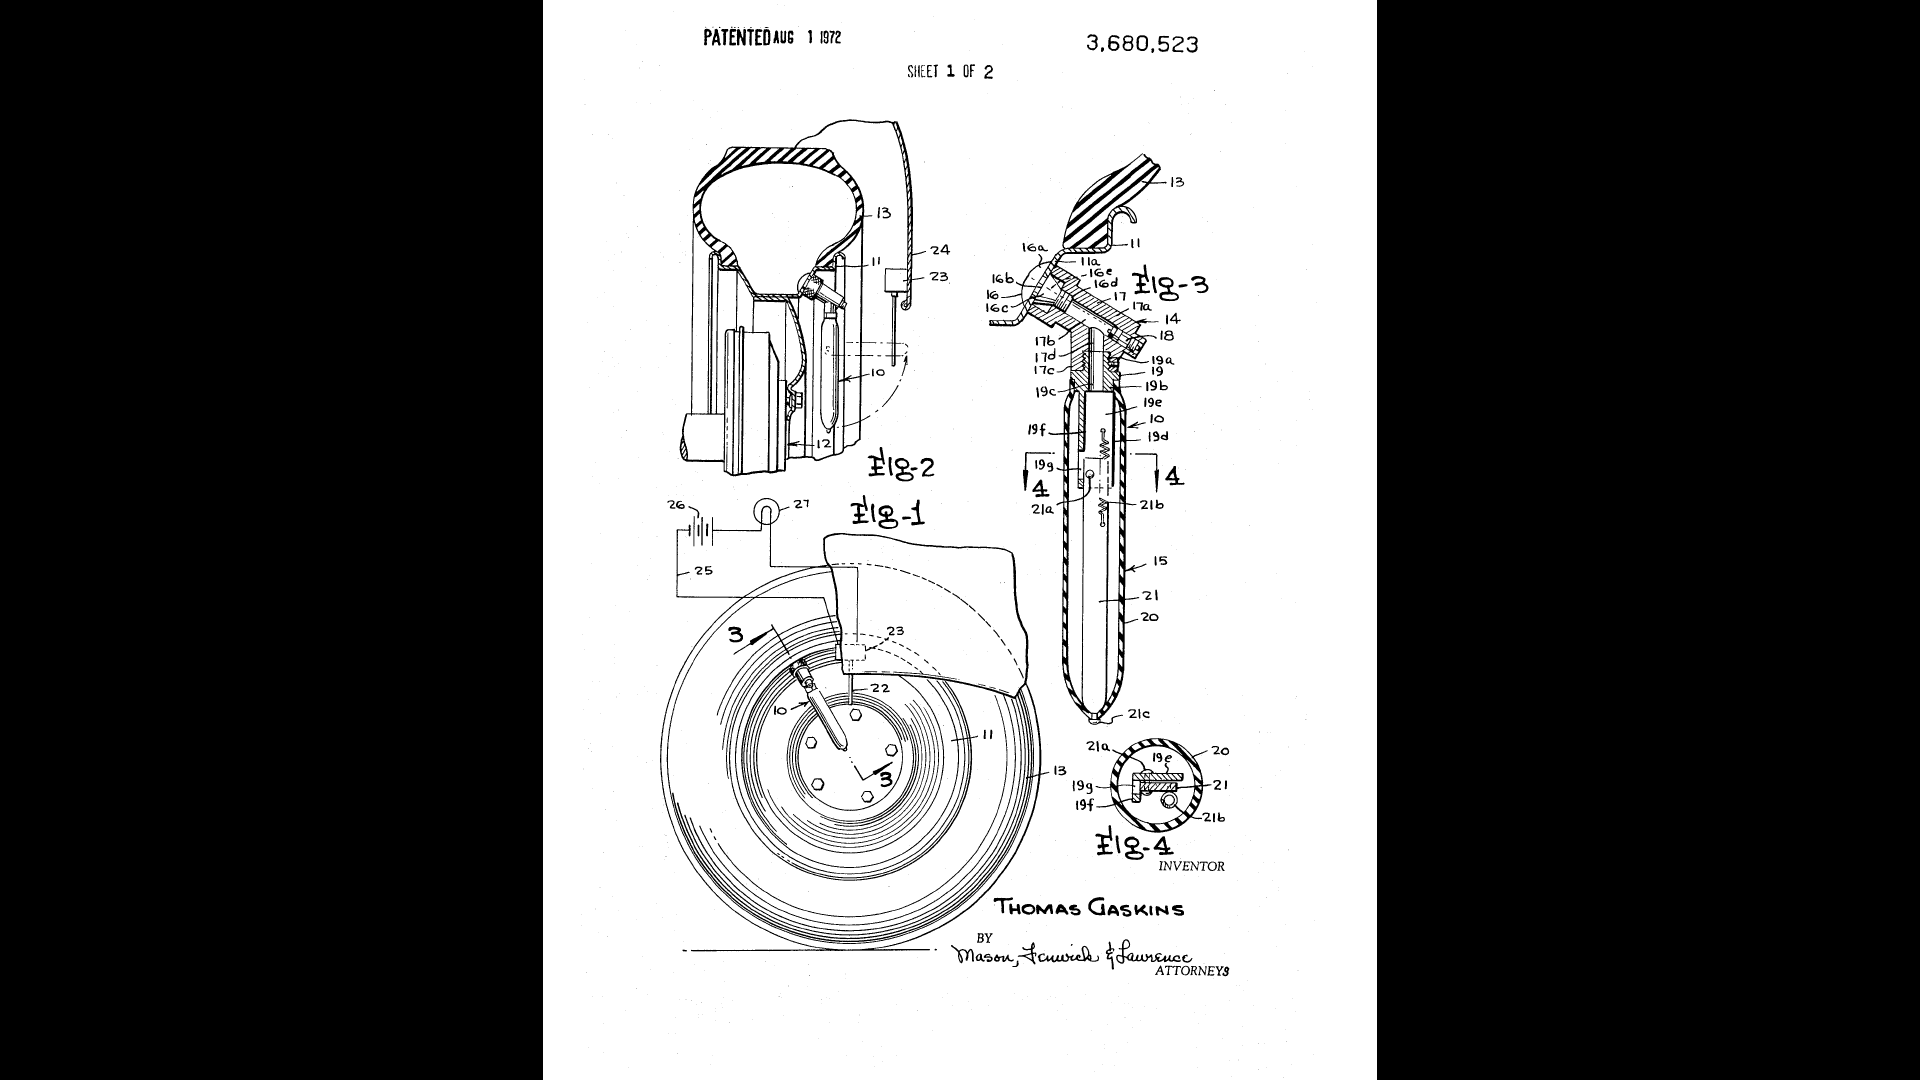 Tom Gaskins Patent No. 3,680,523